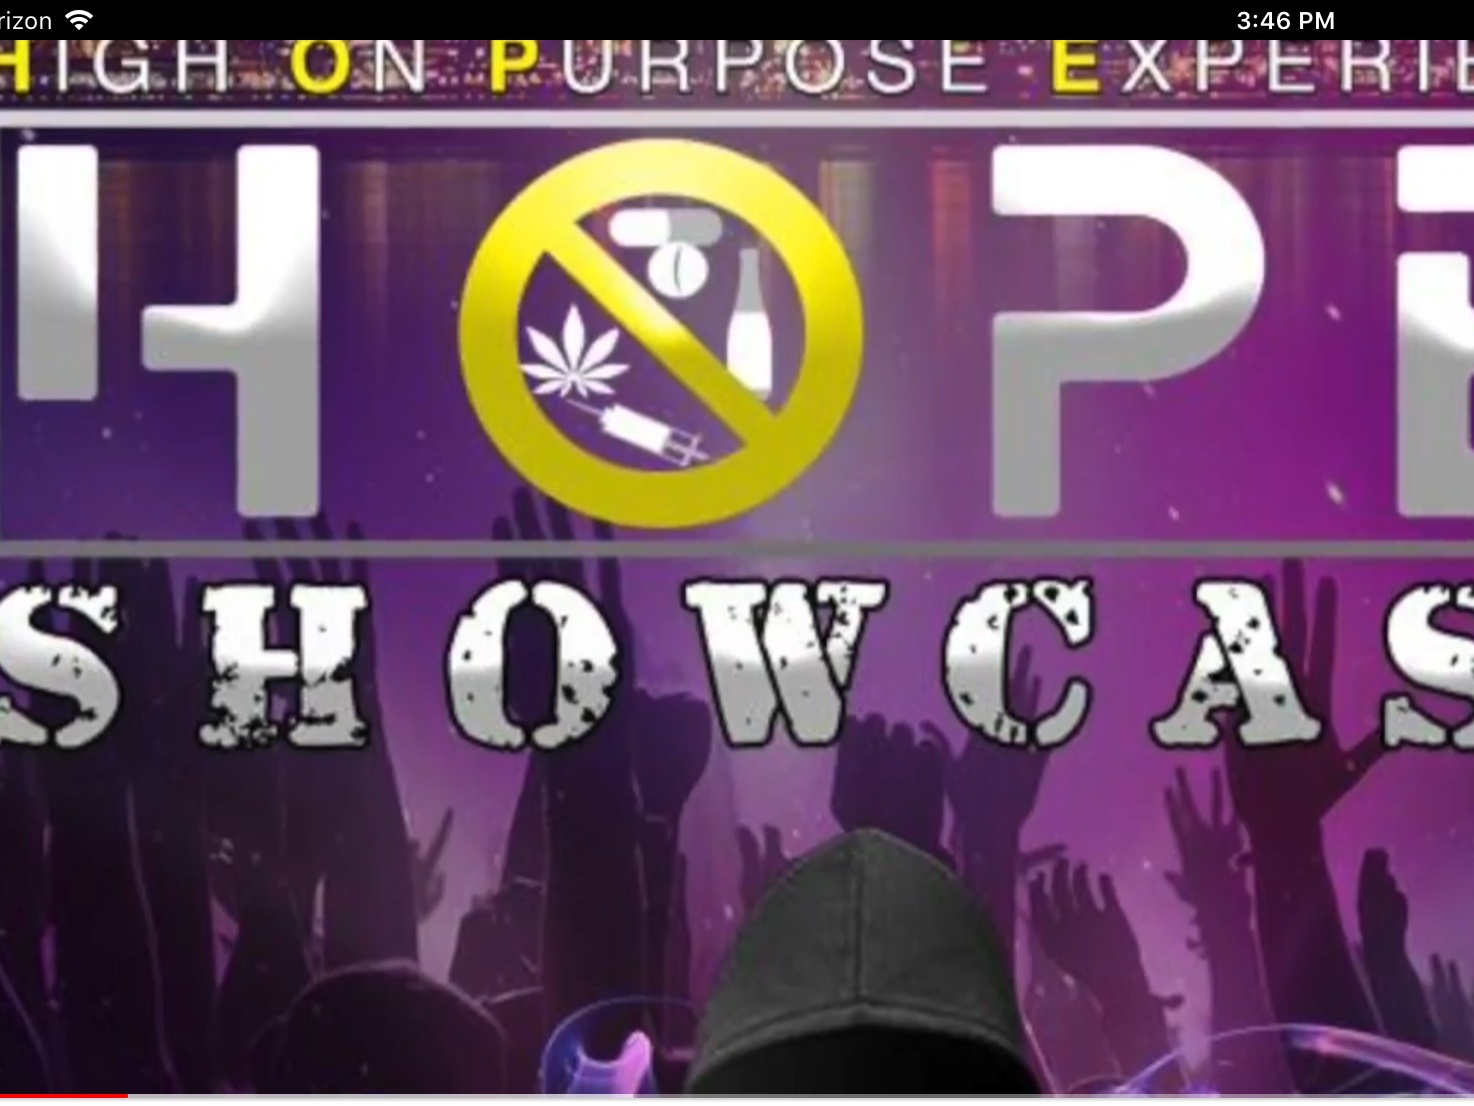 Hope Showcase 2017